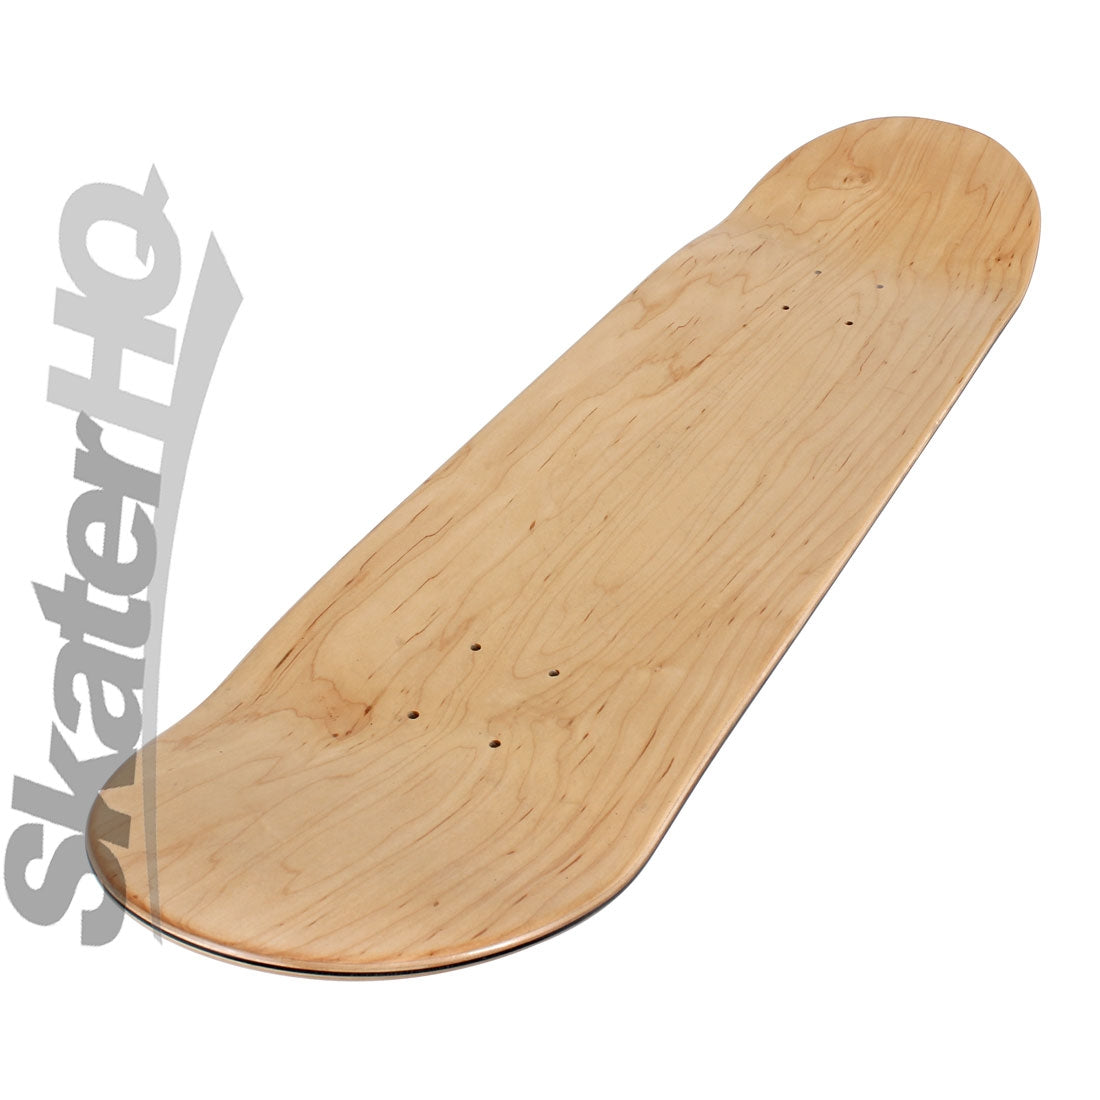 Absolute Blank 8.5 Deck - Natural Skateboard Decks ALL BLANKS